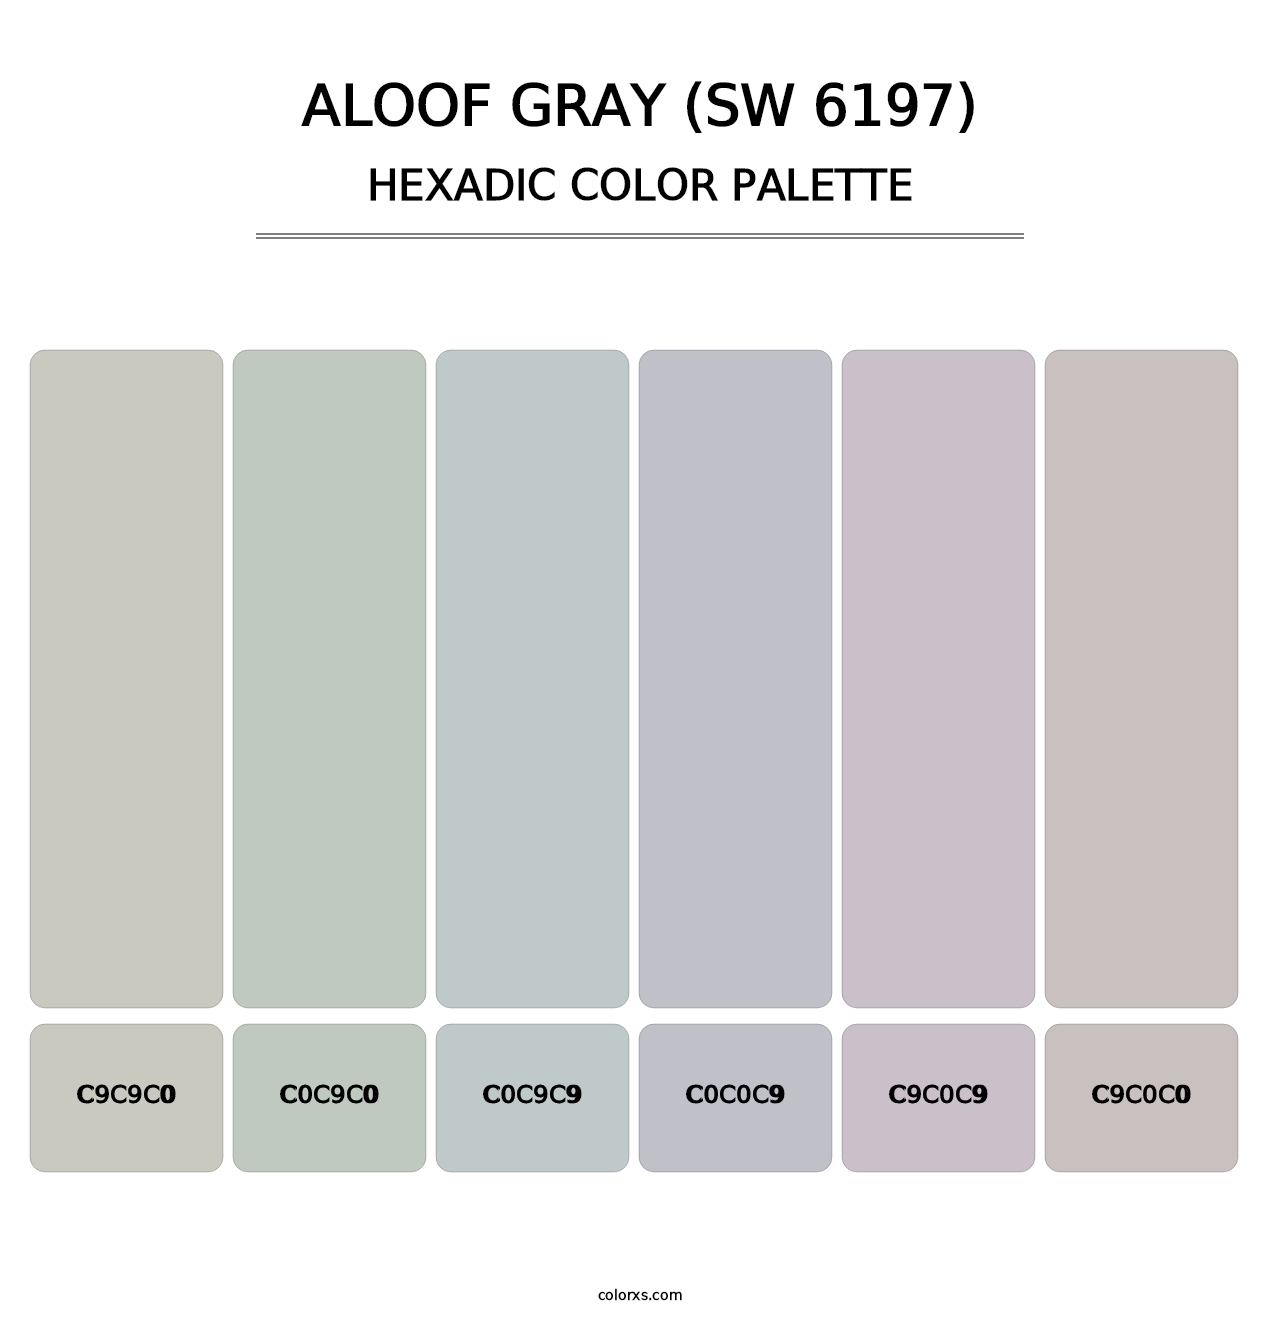 Aloof Gray (SW 6197) - Hexadic Color Palette